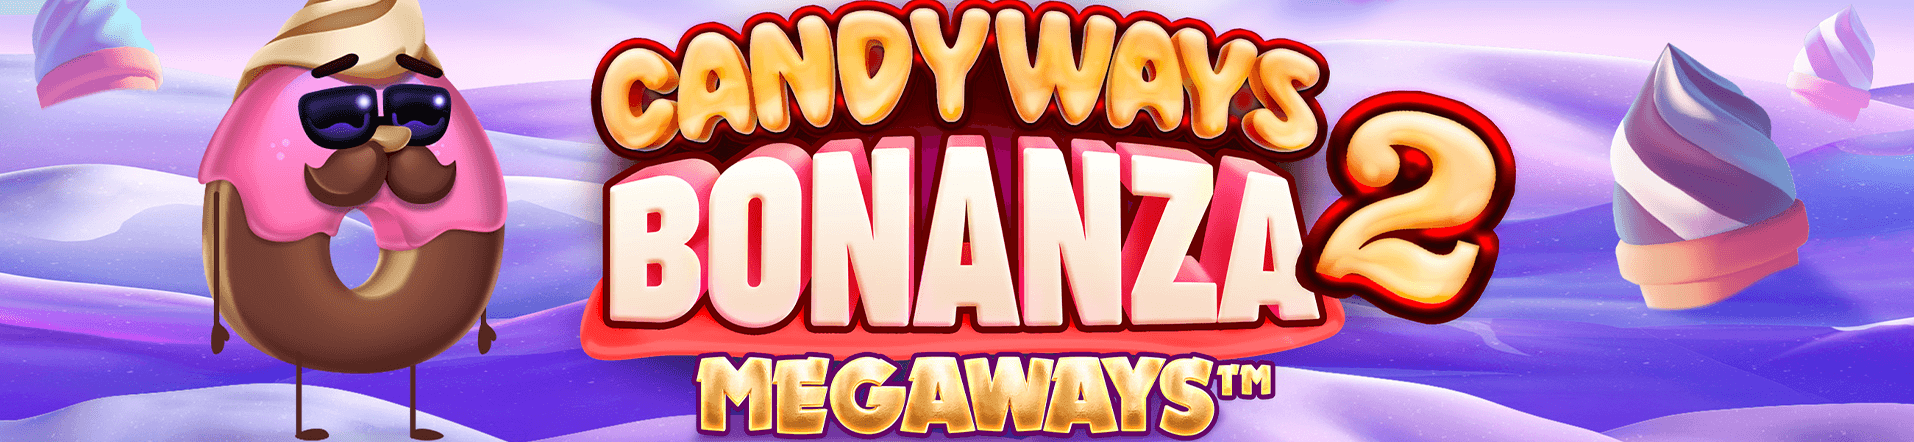 Candyways Bonanza 2 